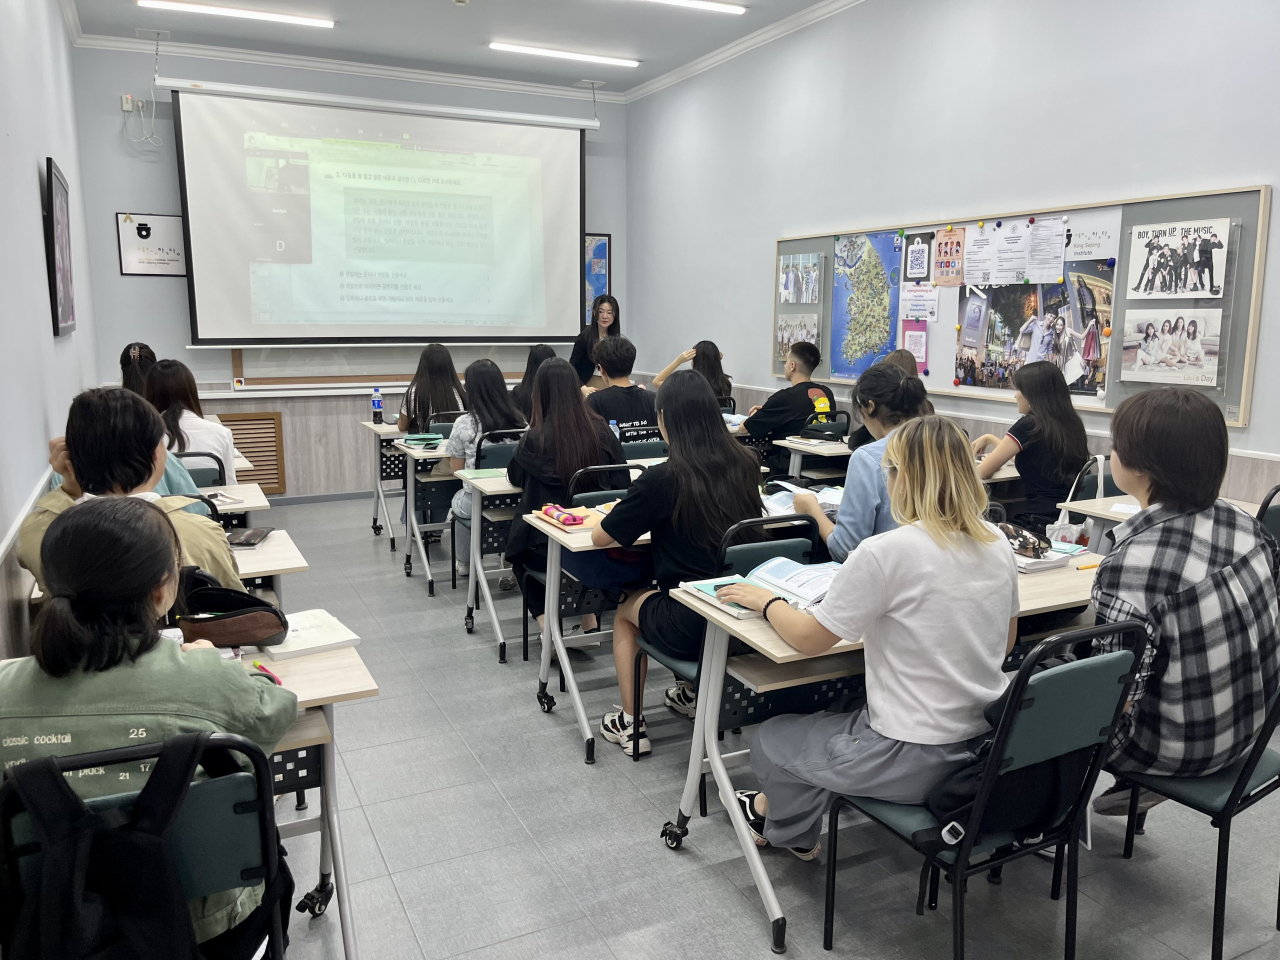 A Korean language class proceeds inside the classroom of the Sejong Institute in Tashkent. (Kim Arin/The Korea Herald)